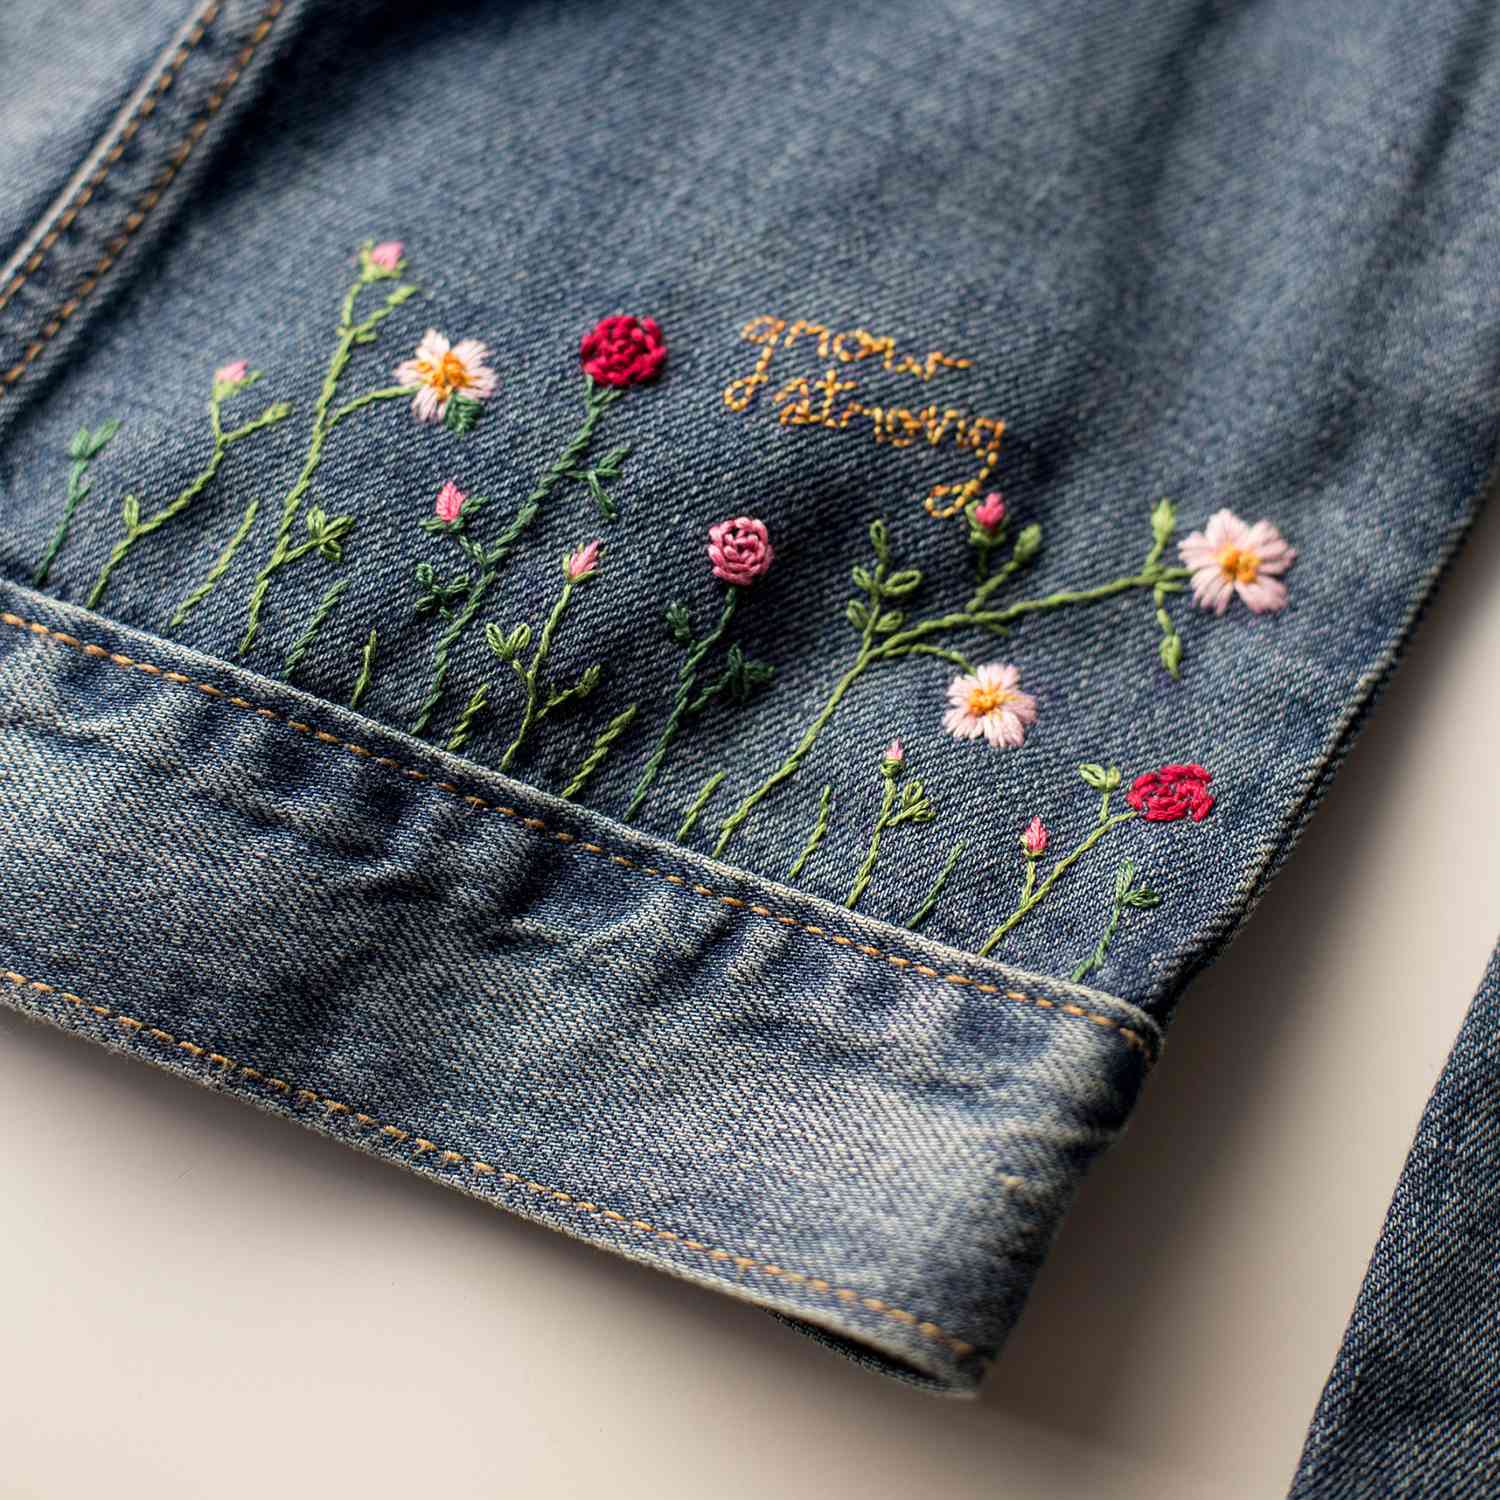 embroidered-jean-jacket-9155.jpg (skyword:334738)